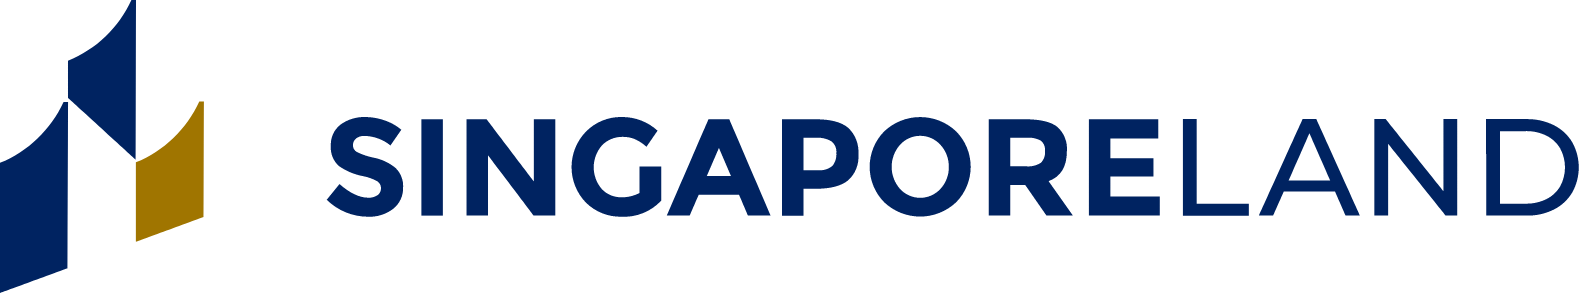 Singapore Land logo large (transparent PNG)